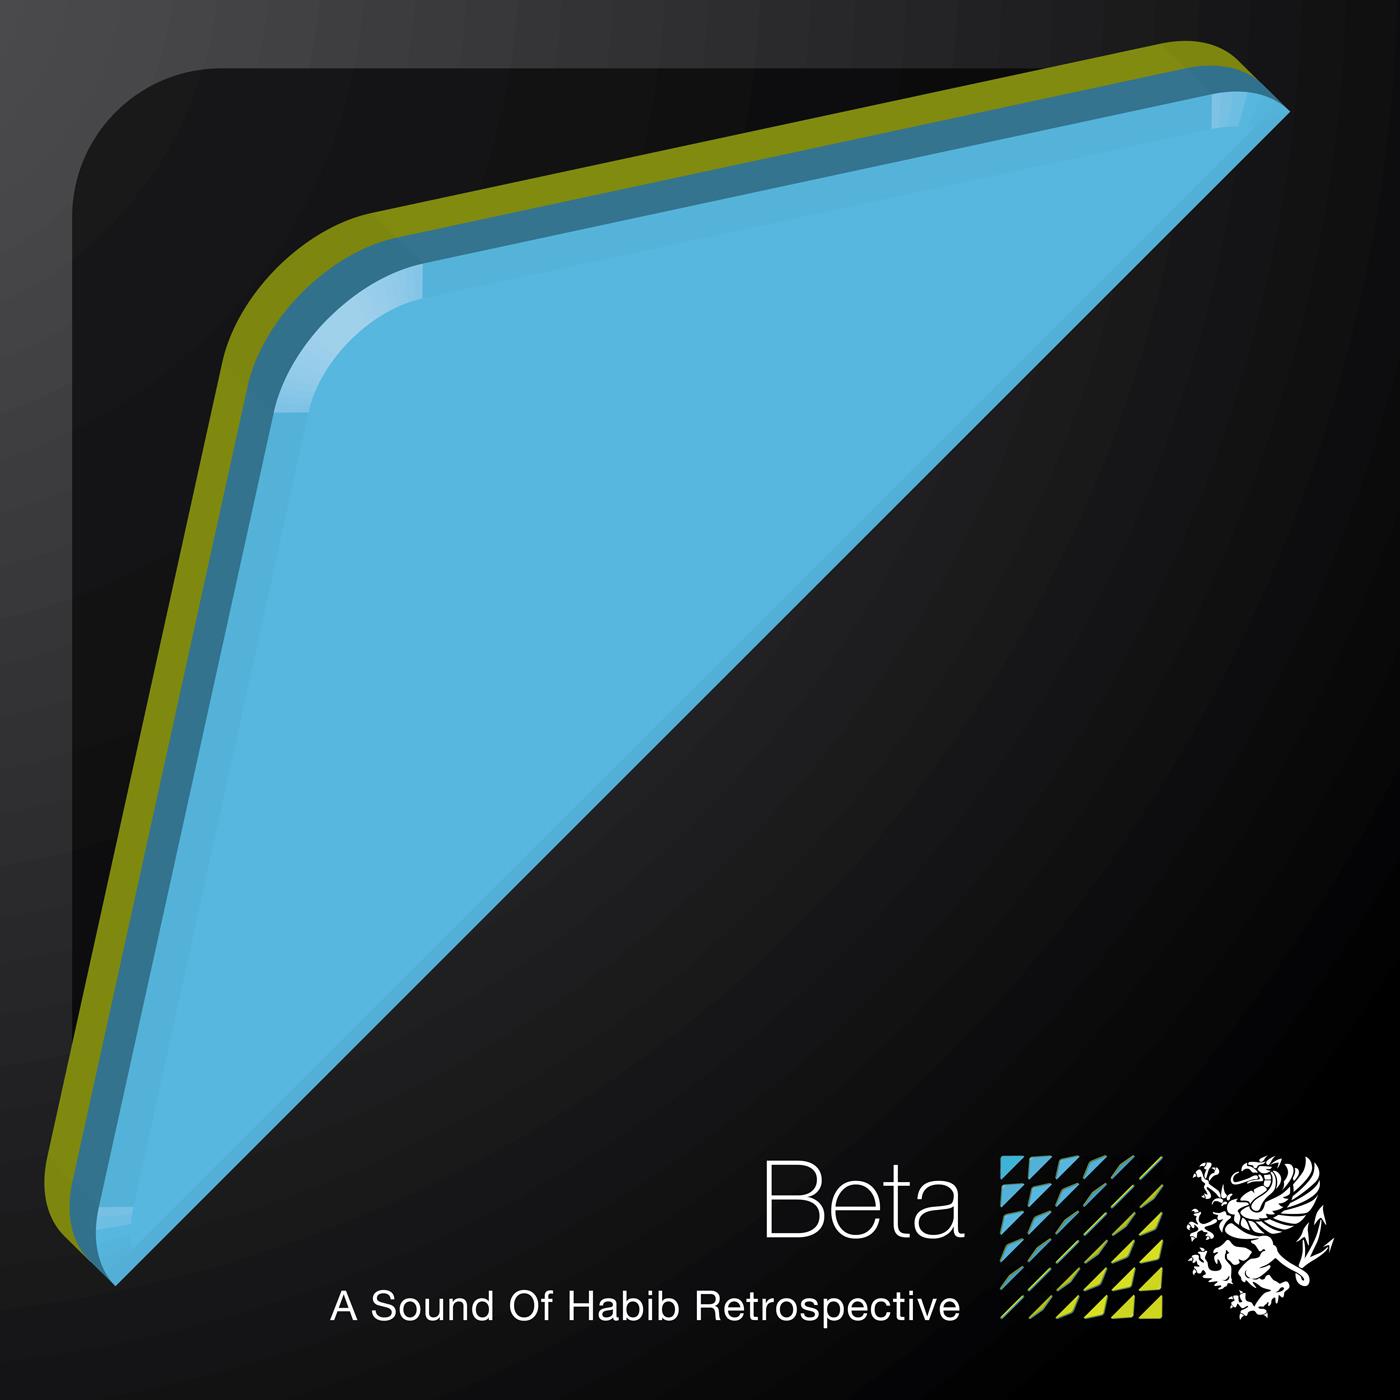 Beta - A Sound of Habib Retrospective